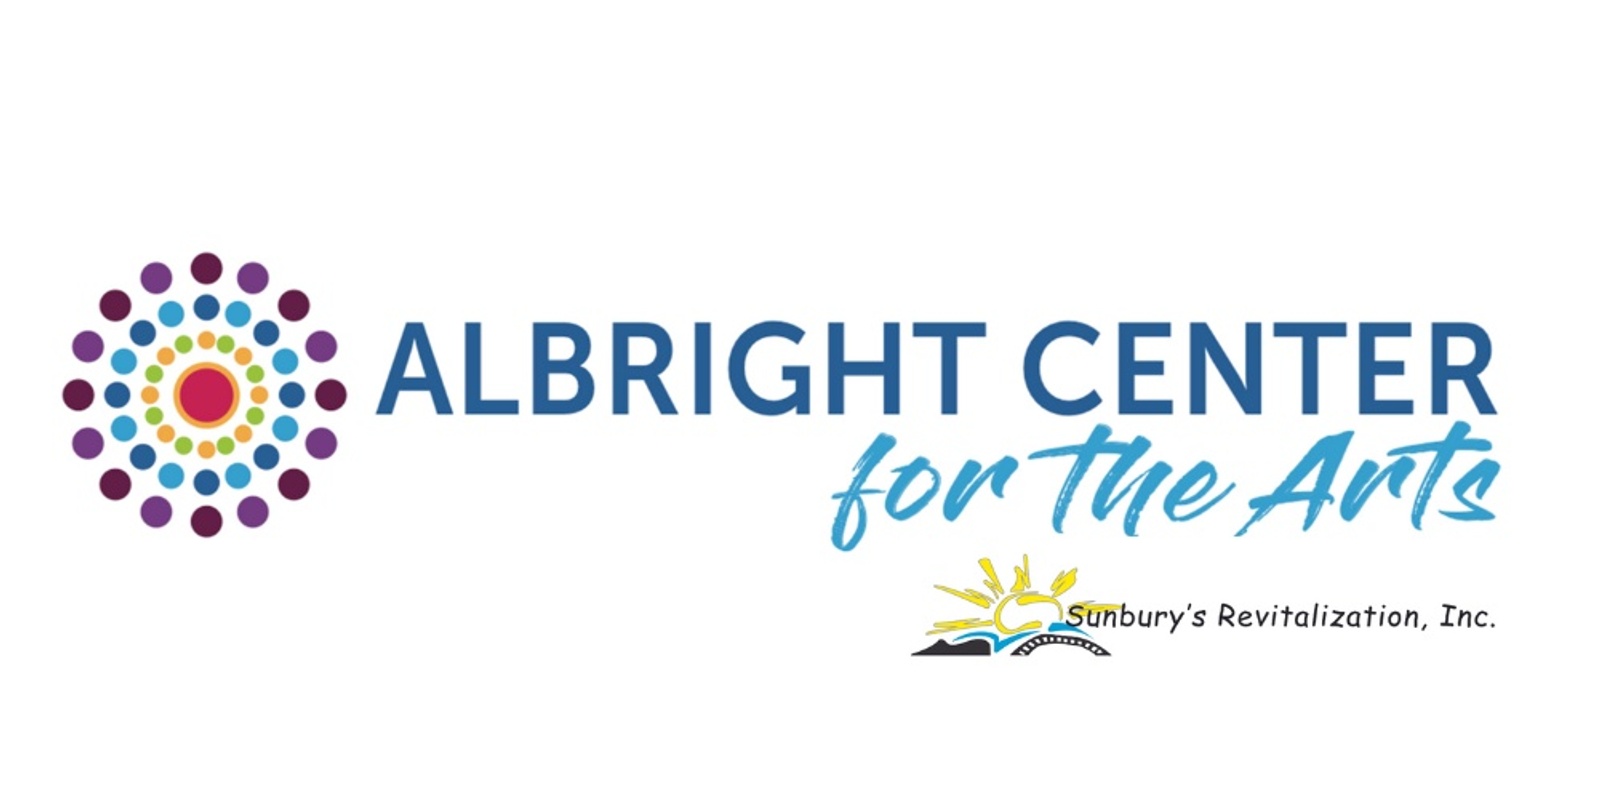 Albright Center for the Arts's banner